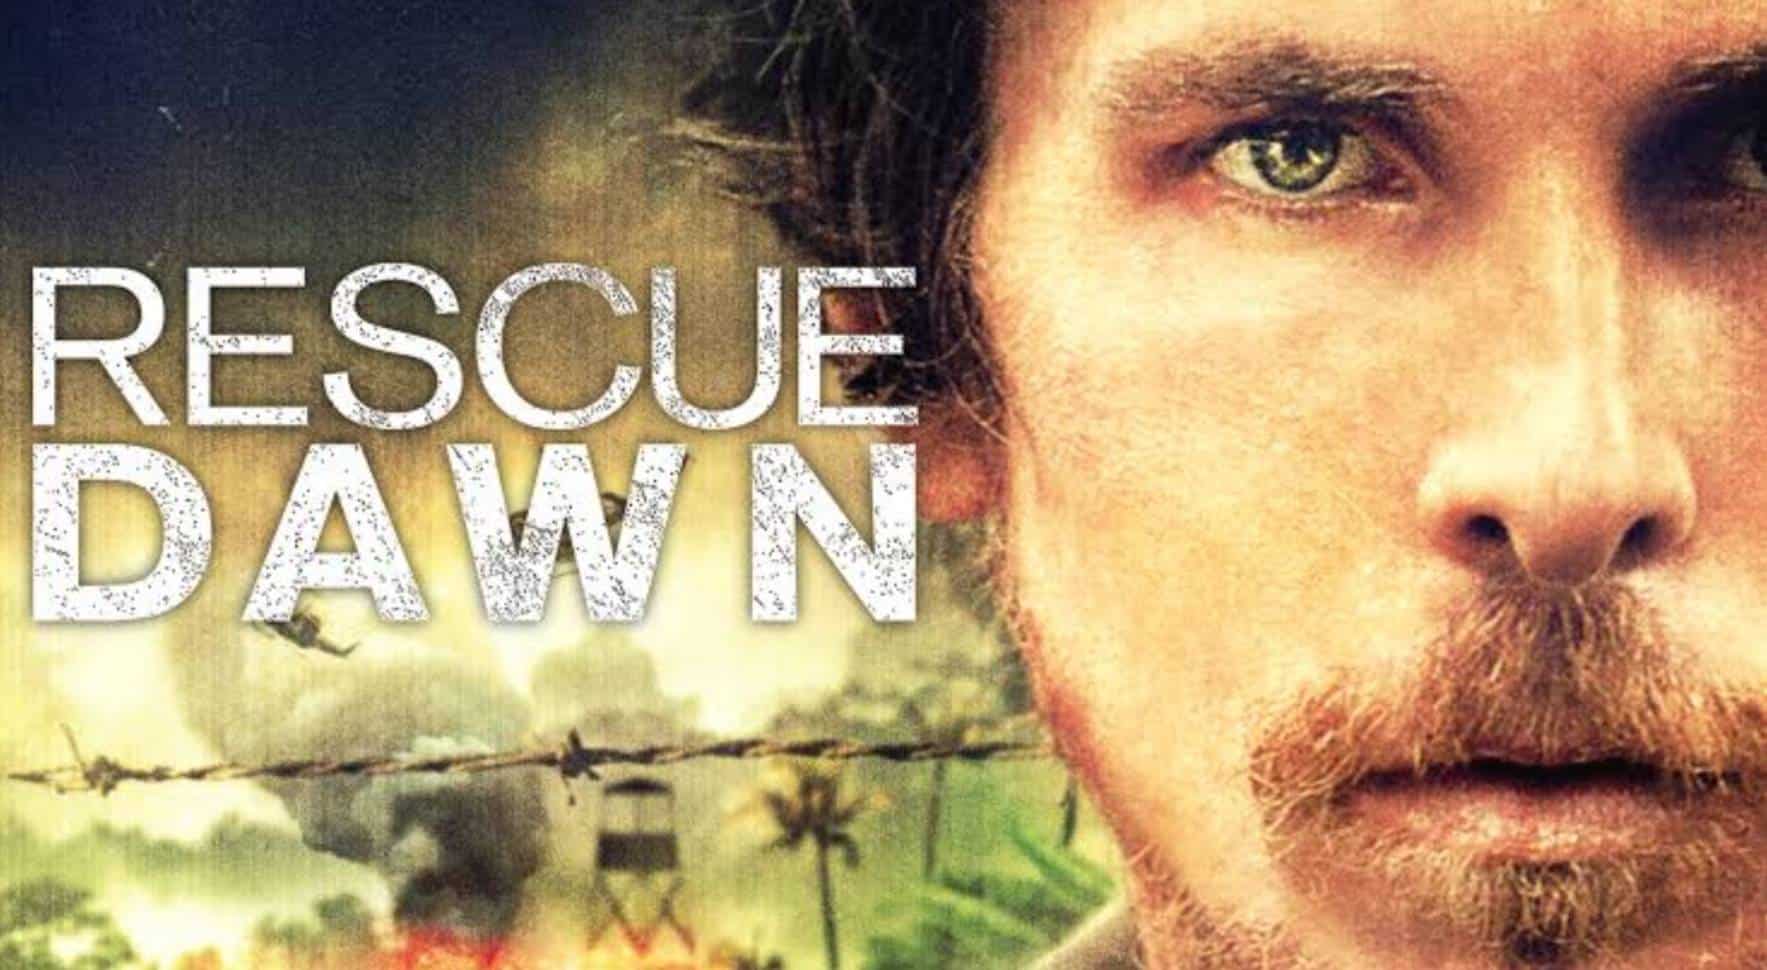 Rescue Dawn- Based On True Story